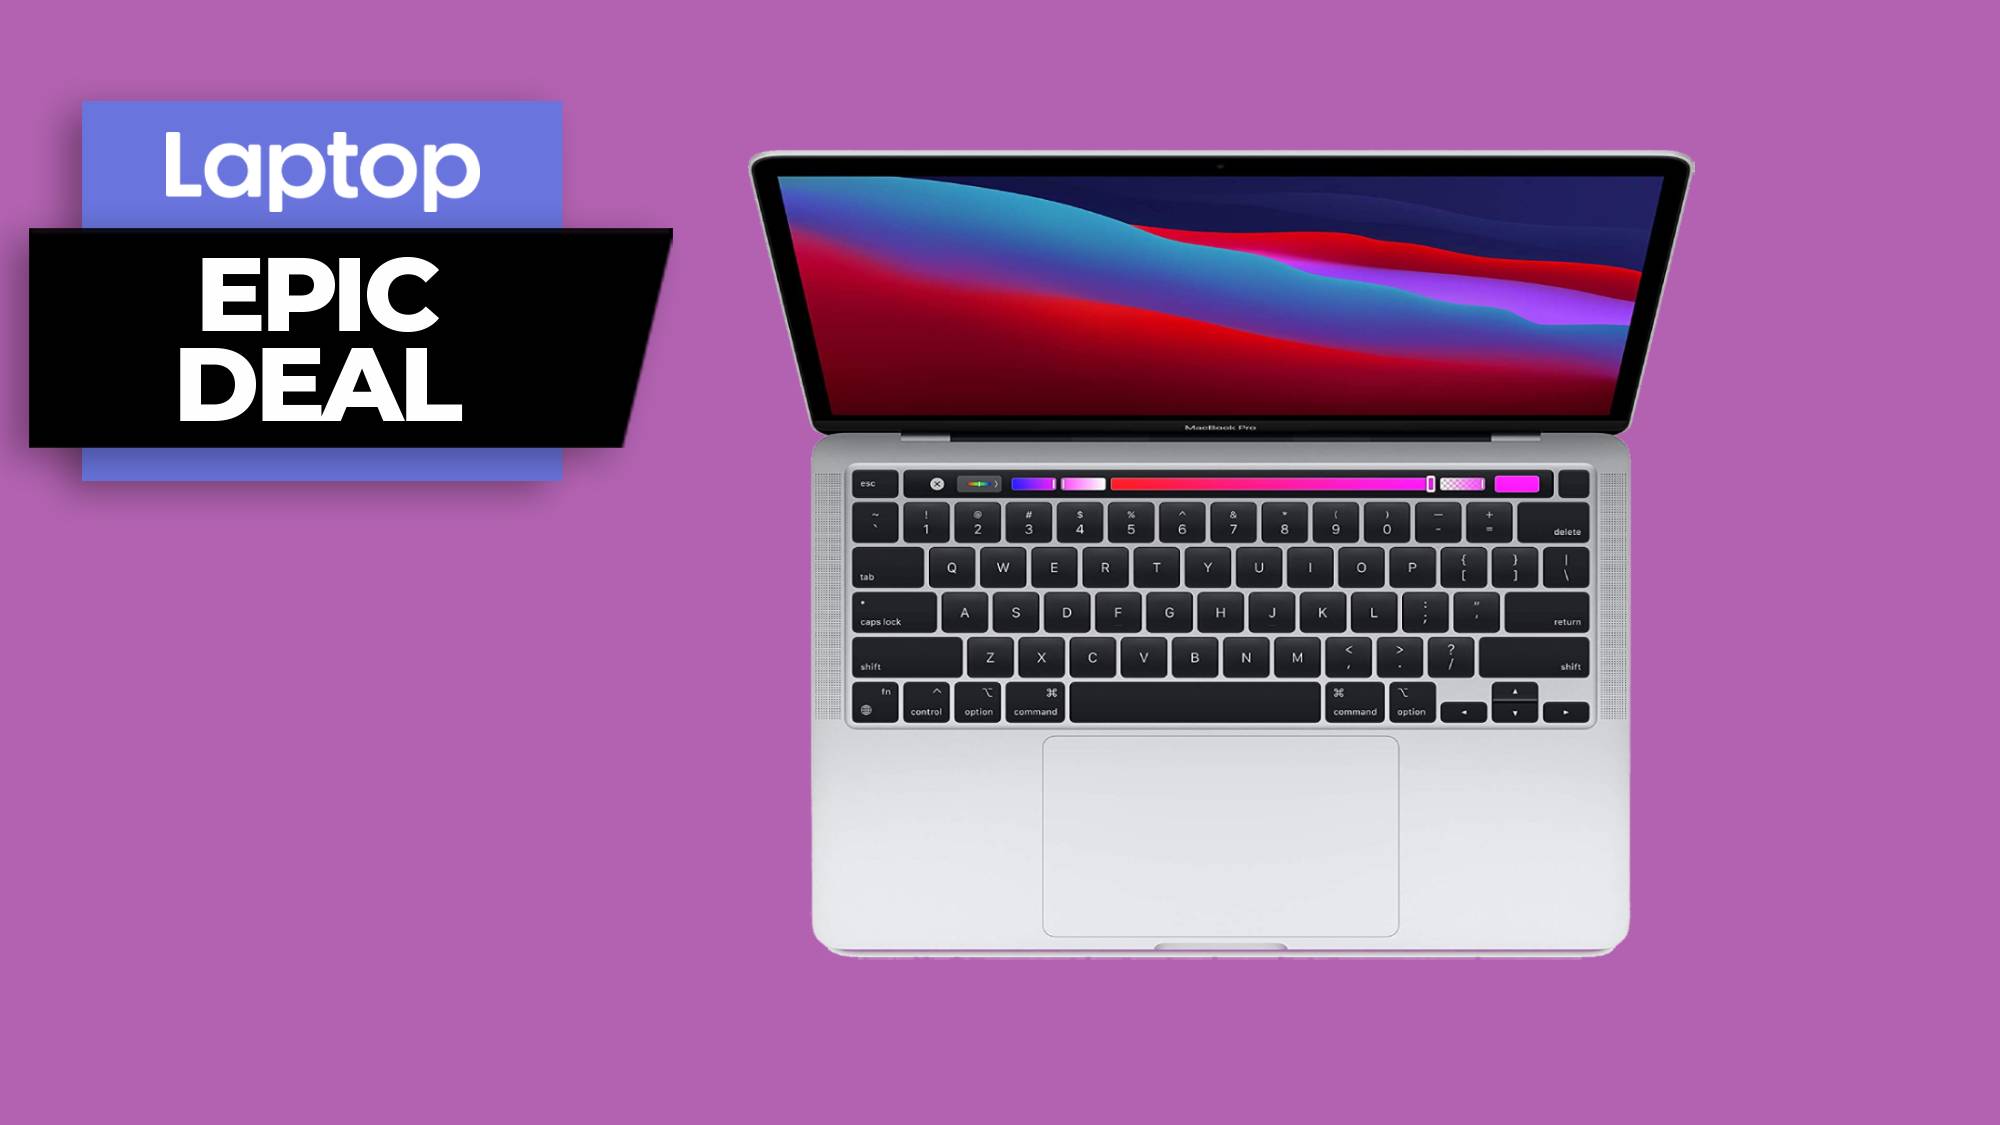 M1 MacBook Pro gets $200 price cut in epic laptop deal | Laptop Mag